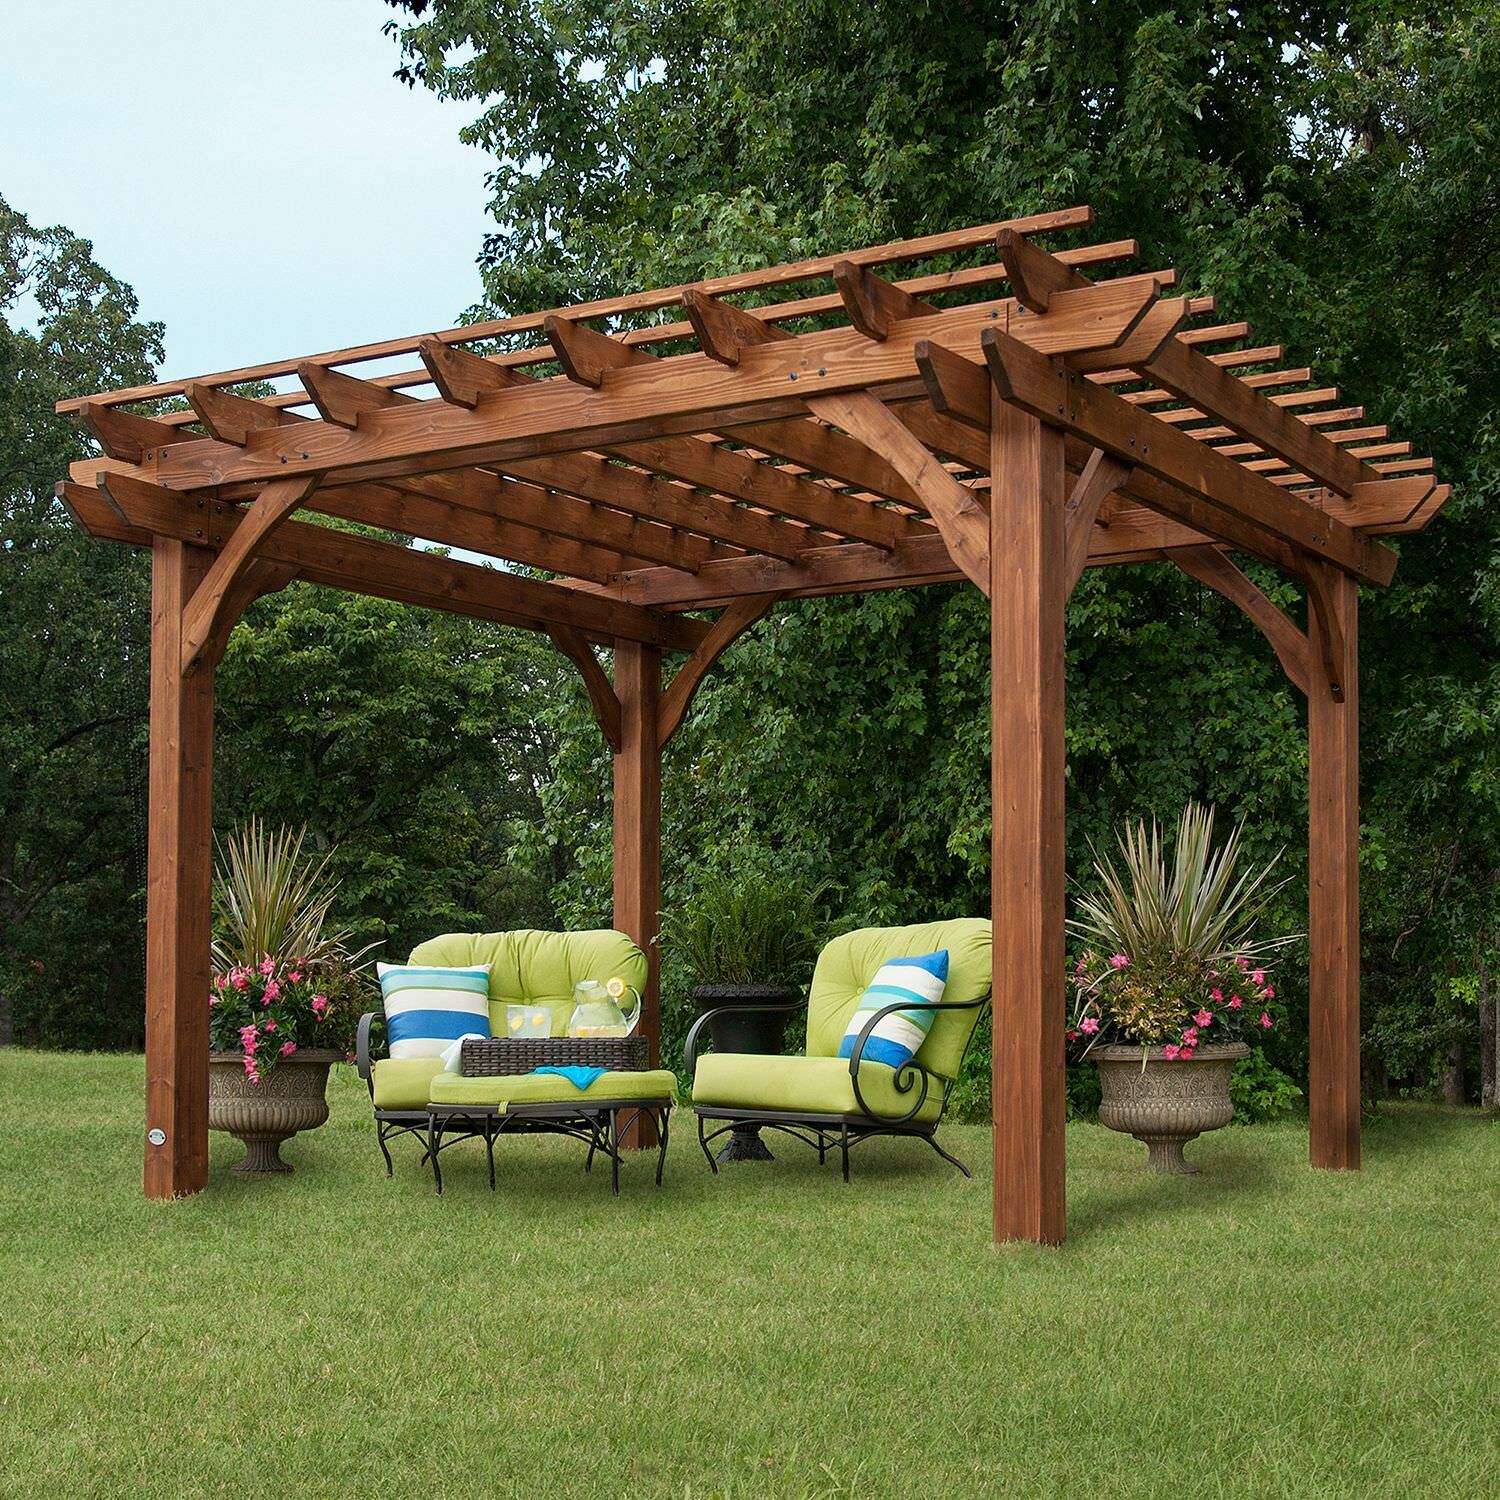 Outdoor Cedar Pergola Kit Wood Patio Structure Garden ...